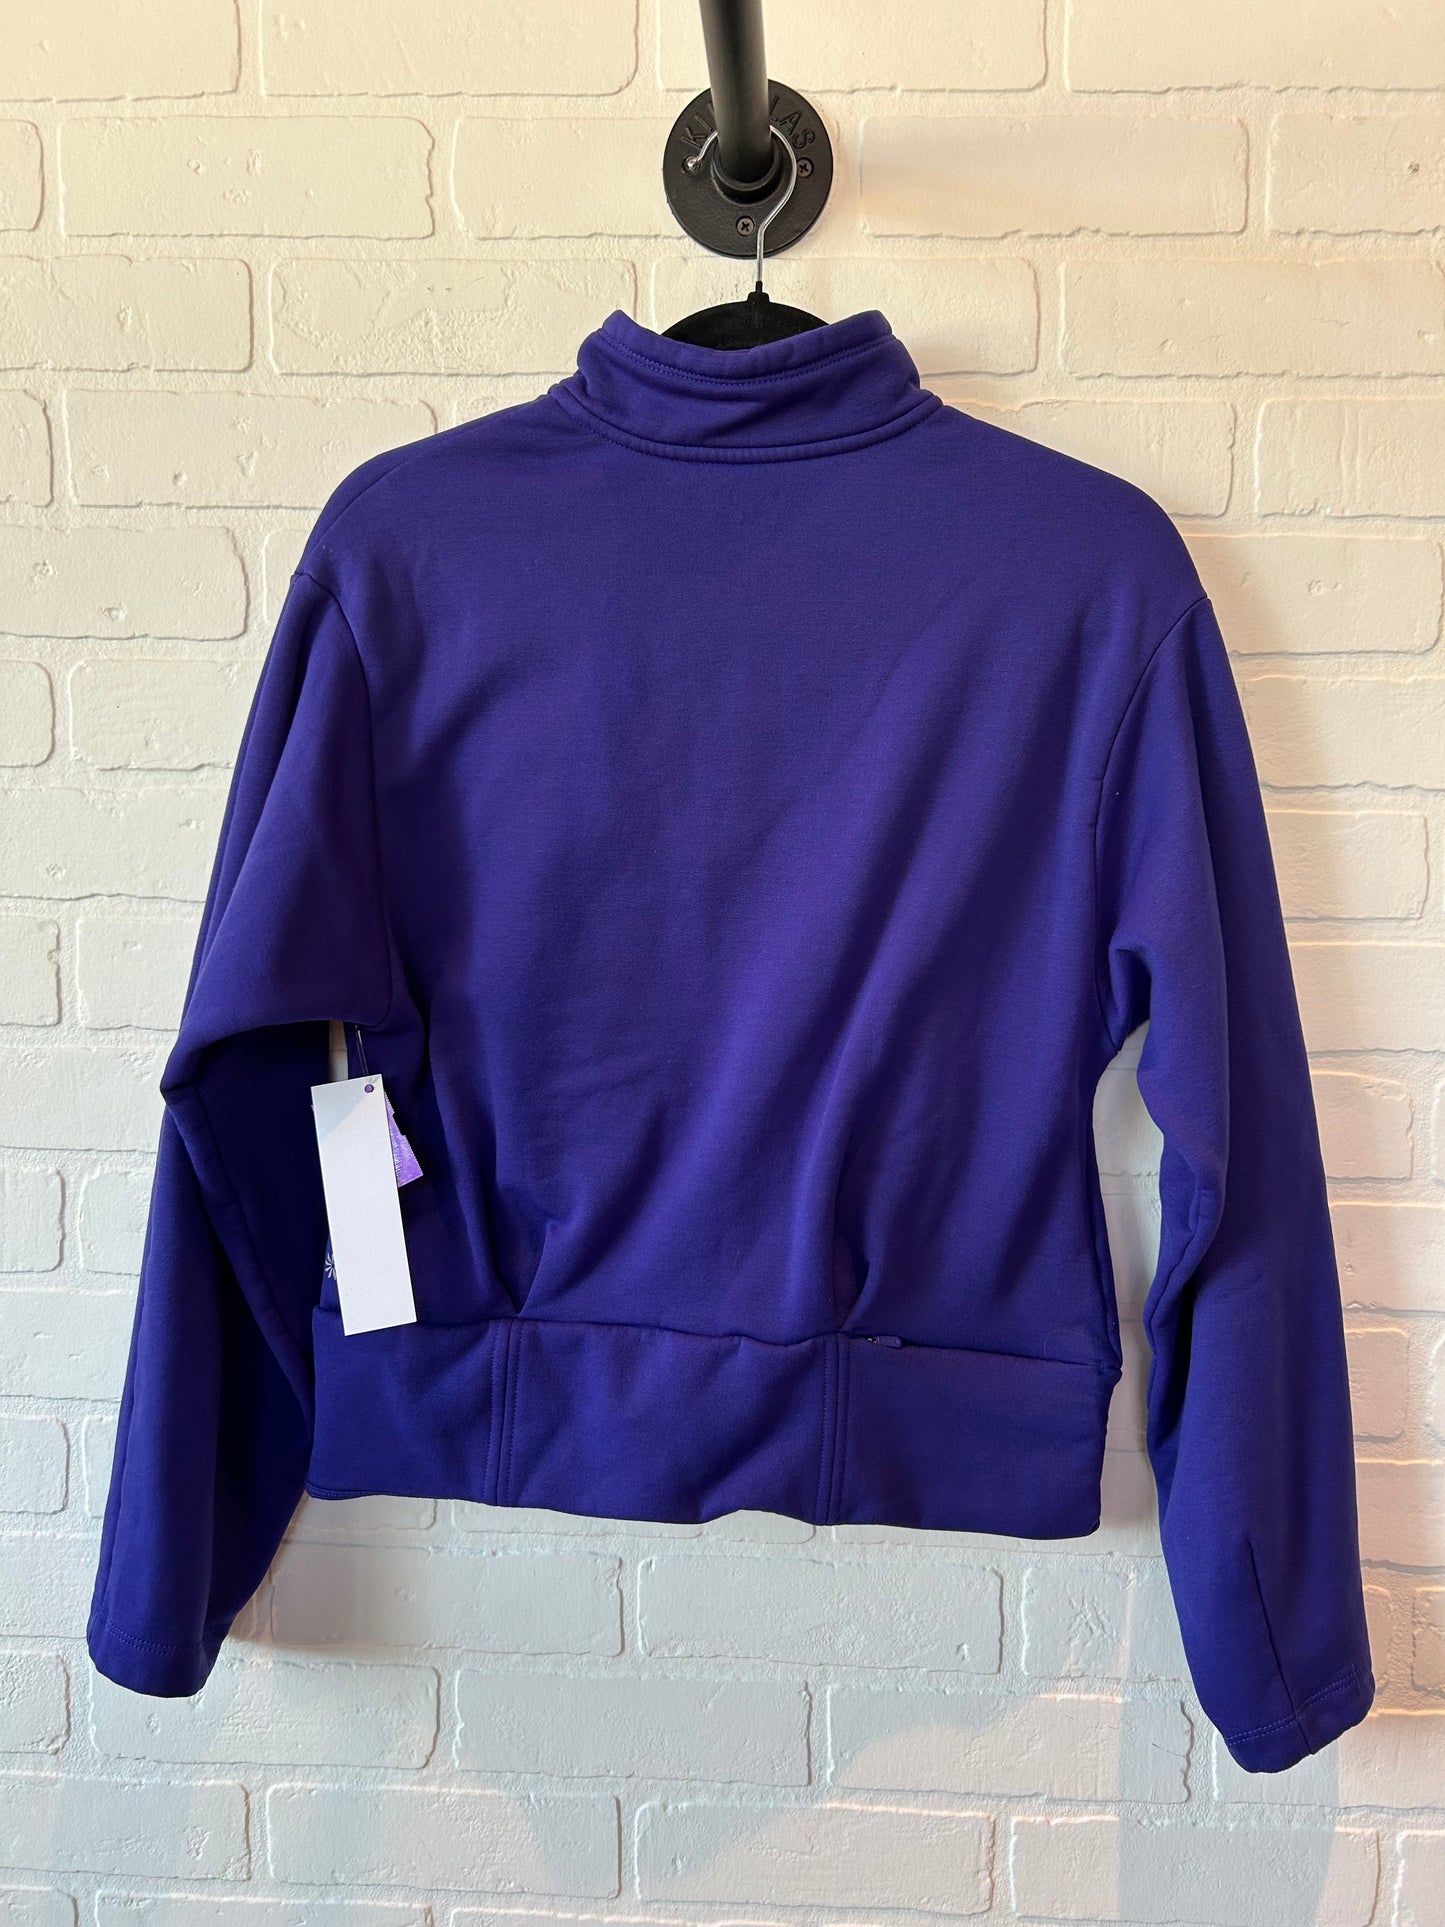 Purple Athletic Sweatshirt Crewneck Athleta, Size S